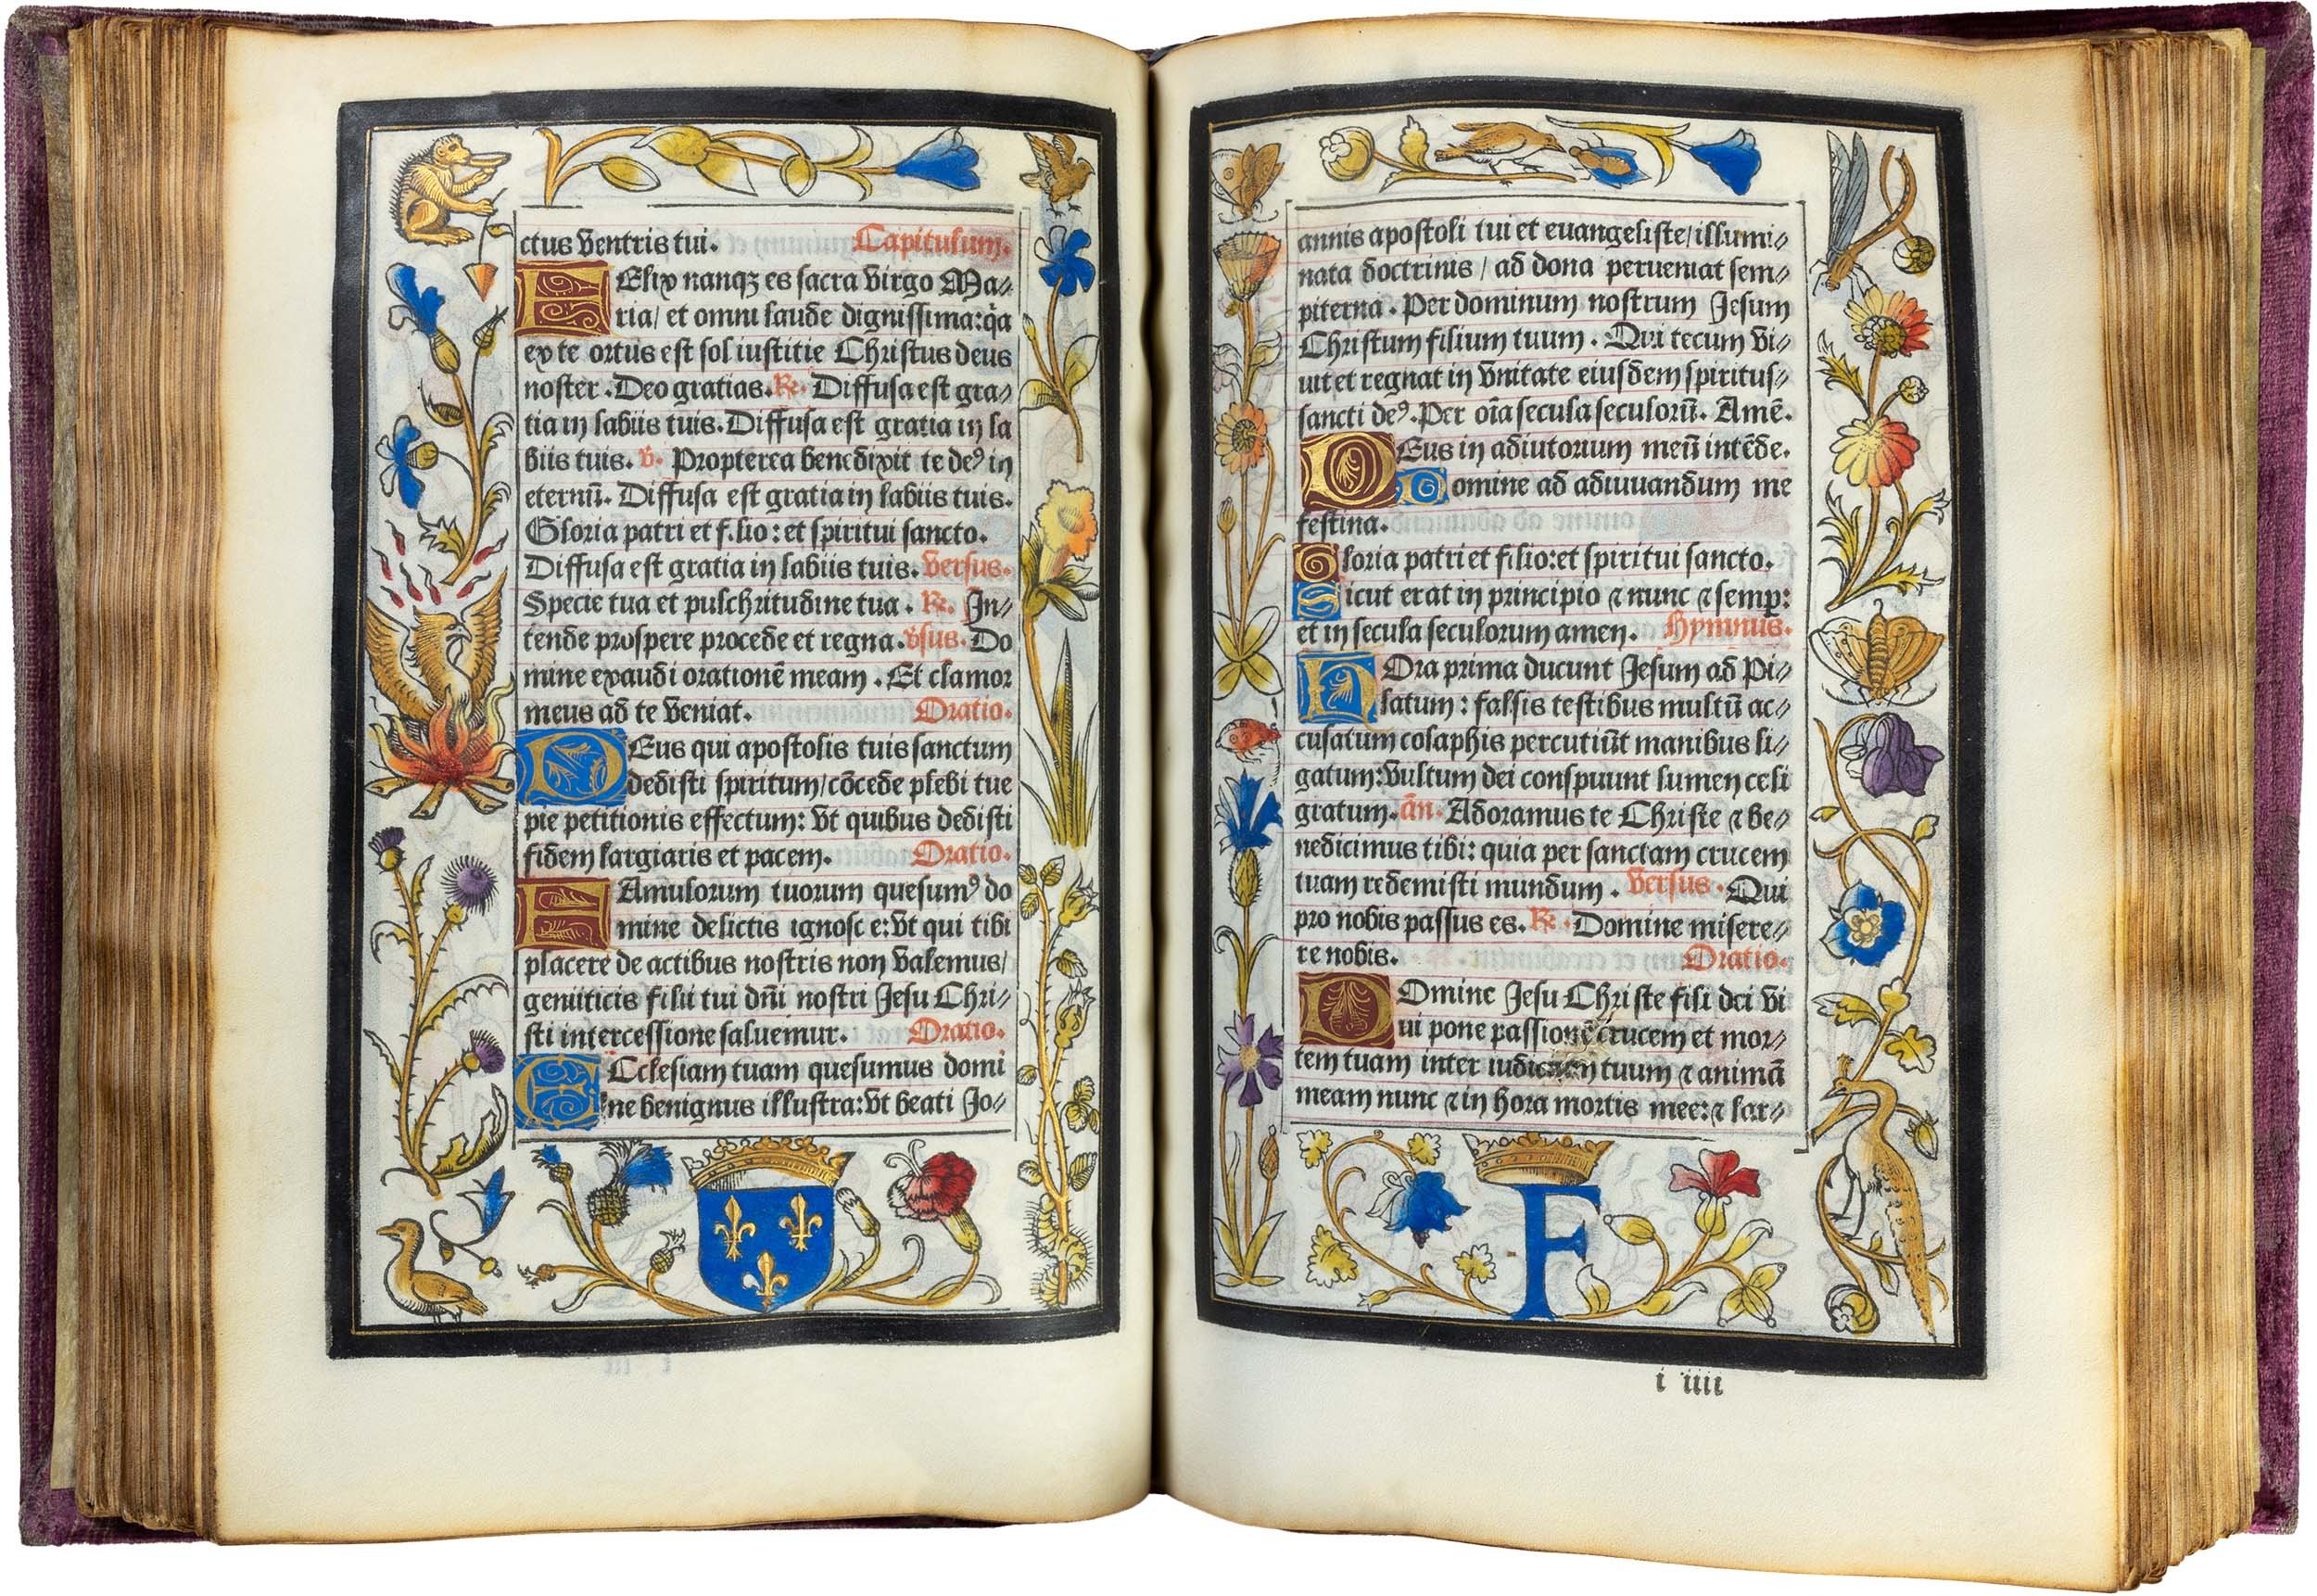 geoffroy-tory-printed-book-of-hours-illuminated-vellum-22-october-1527-prince-dessing-villeneuve-horae-bmv-70.jpg